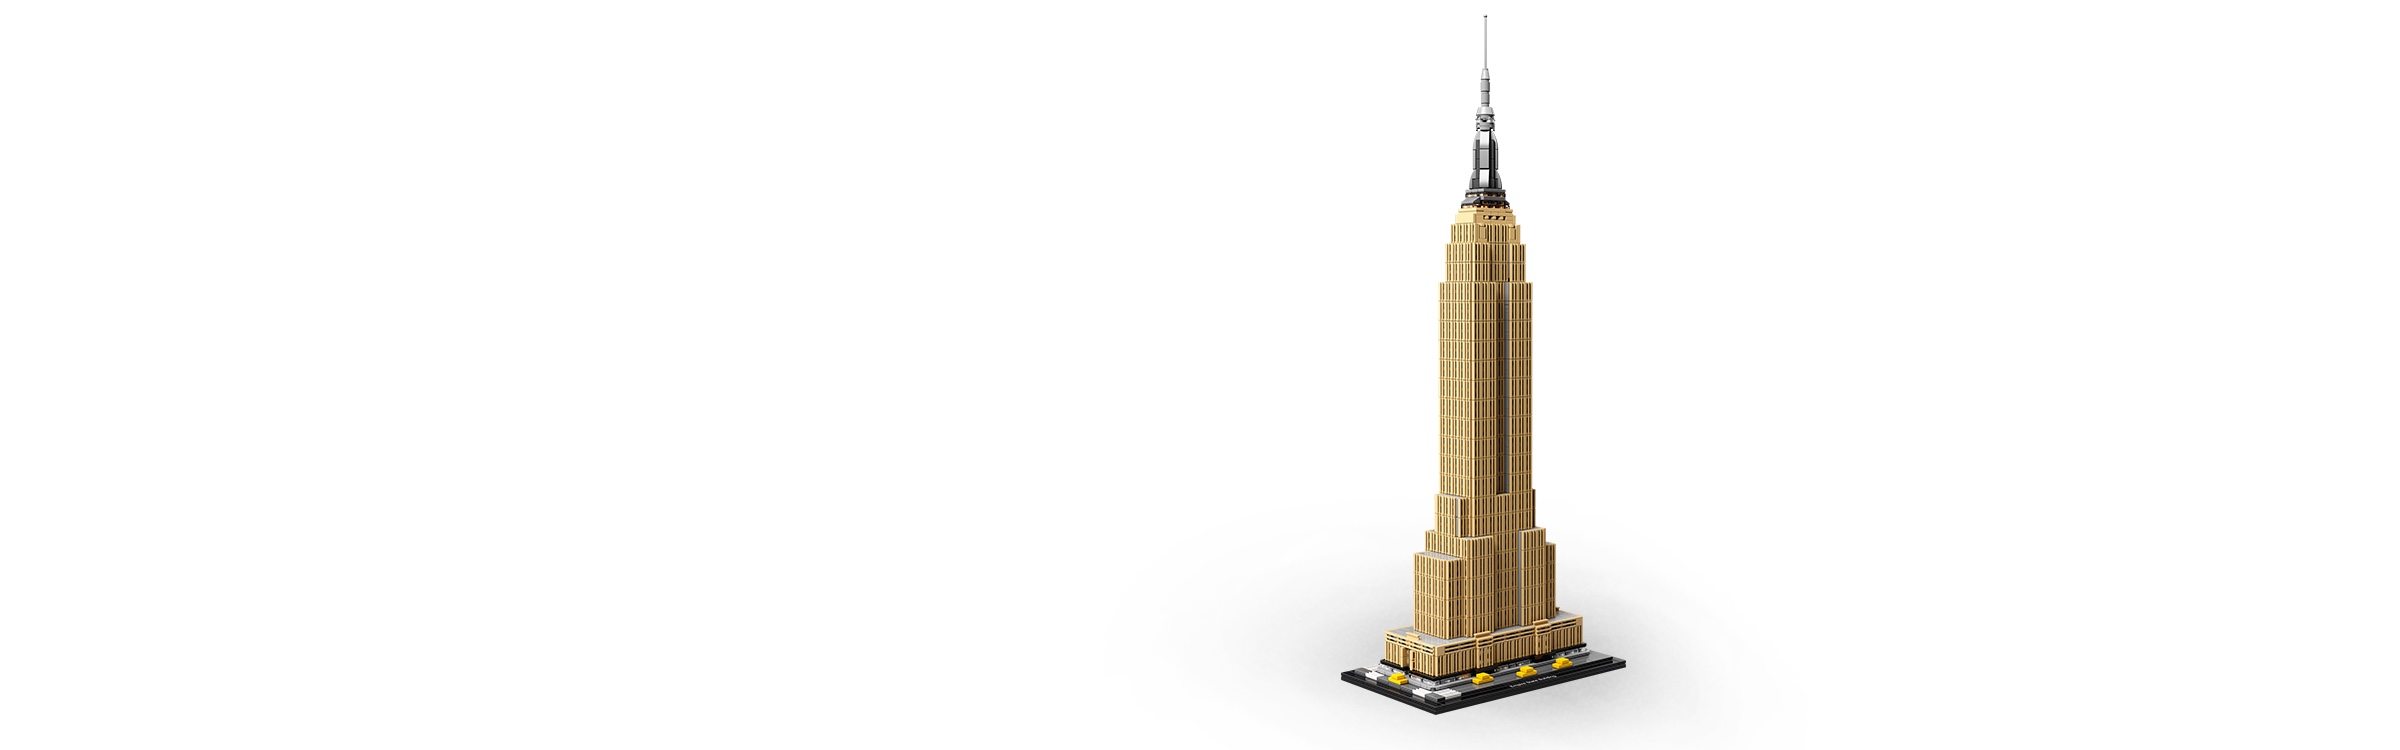 21046 Architecture Empire State Building // New York NEU & OVP Lego